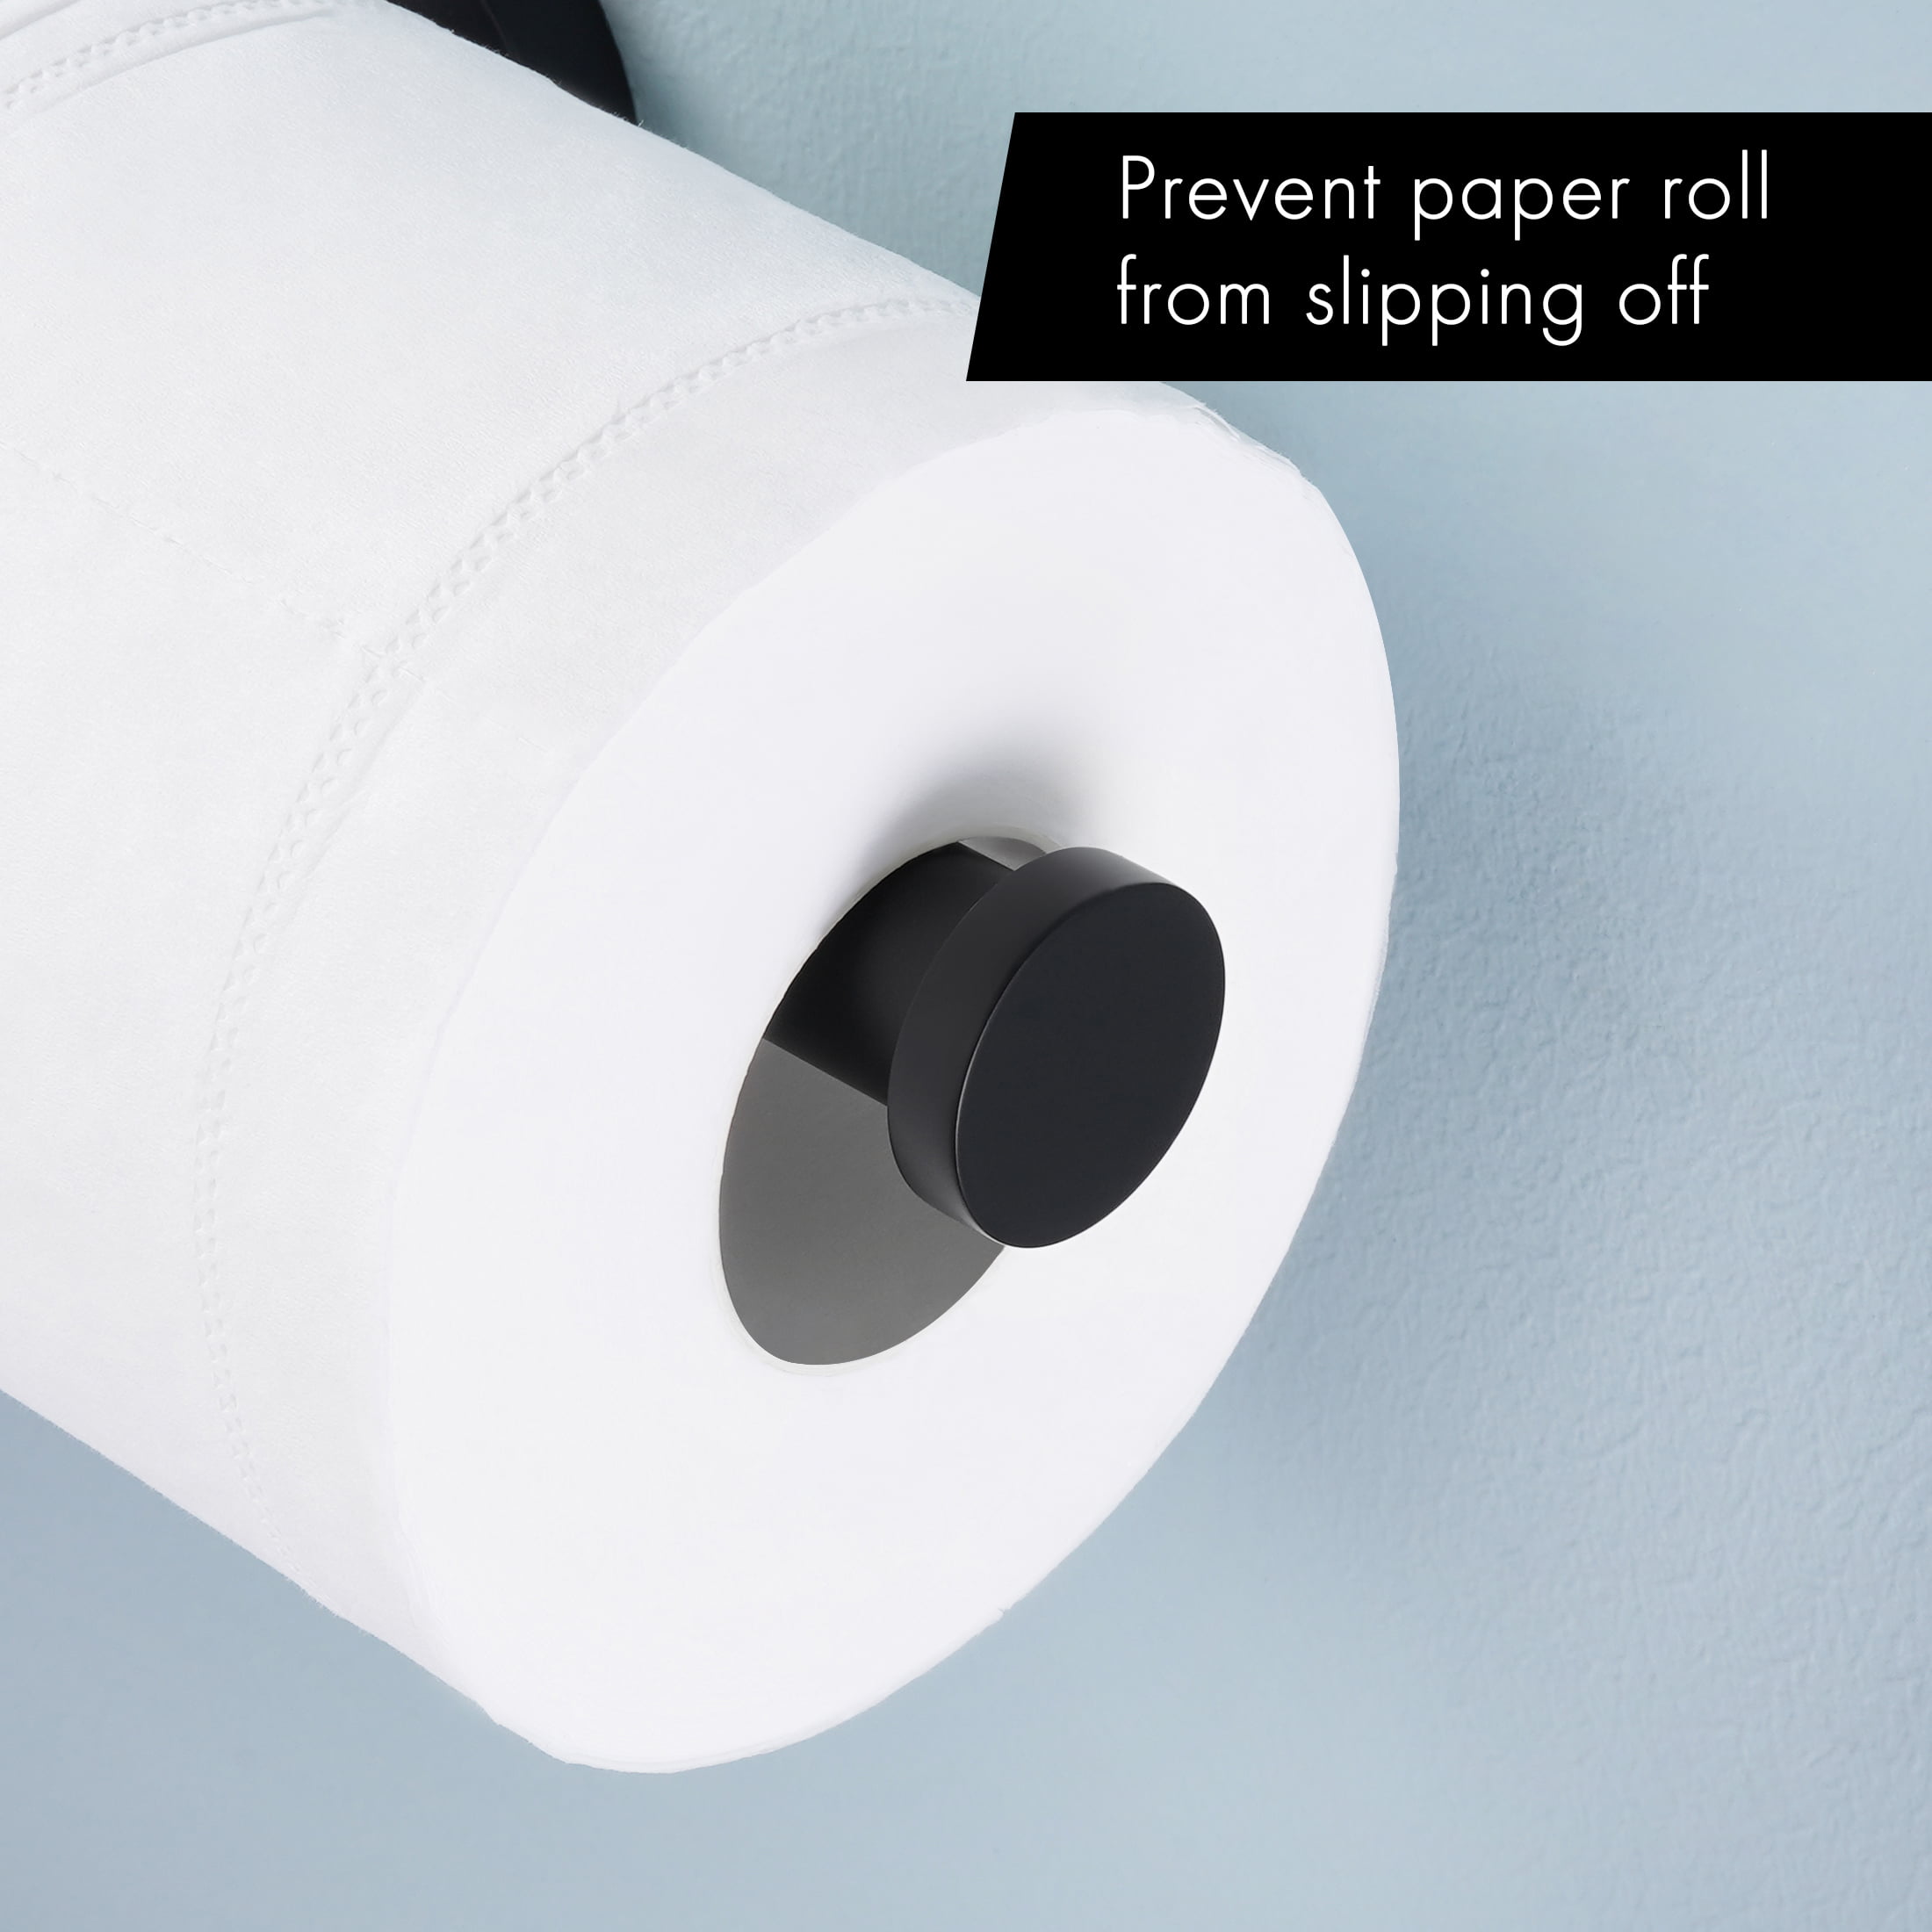  KES Black Toilet Paper Holder, Bathroom Tissue Holder Paper Roll  SUS 304 Stainless Steel Wall Mount Matte Black, A2175S12-BK : Tools & Home  Improvement